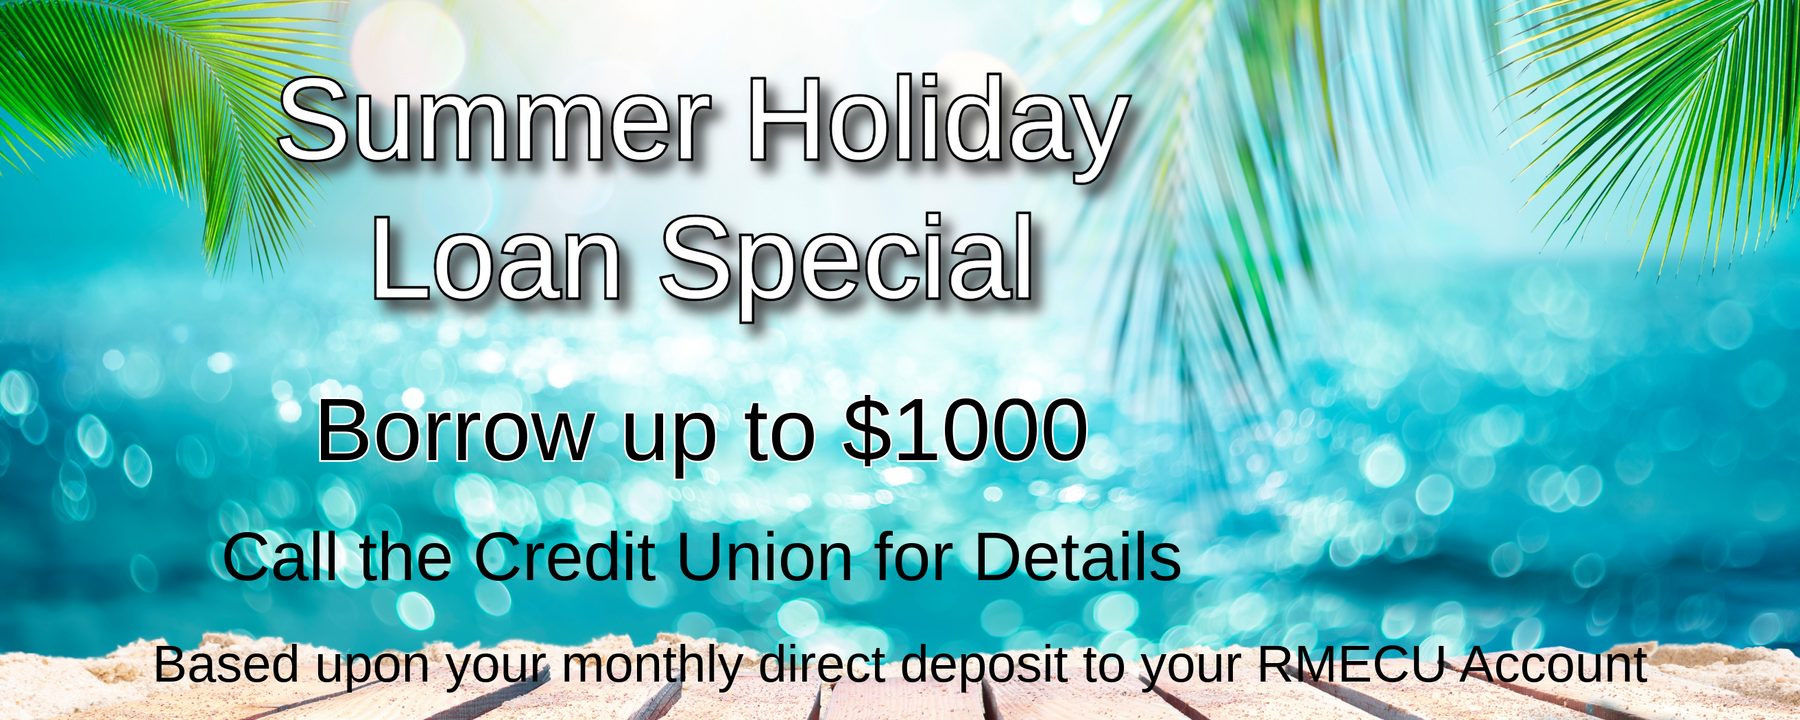 Summer Holiday Loan